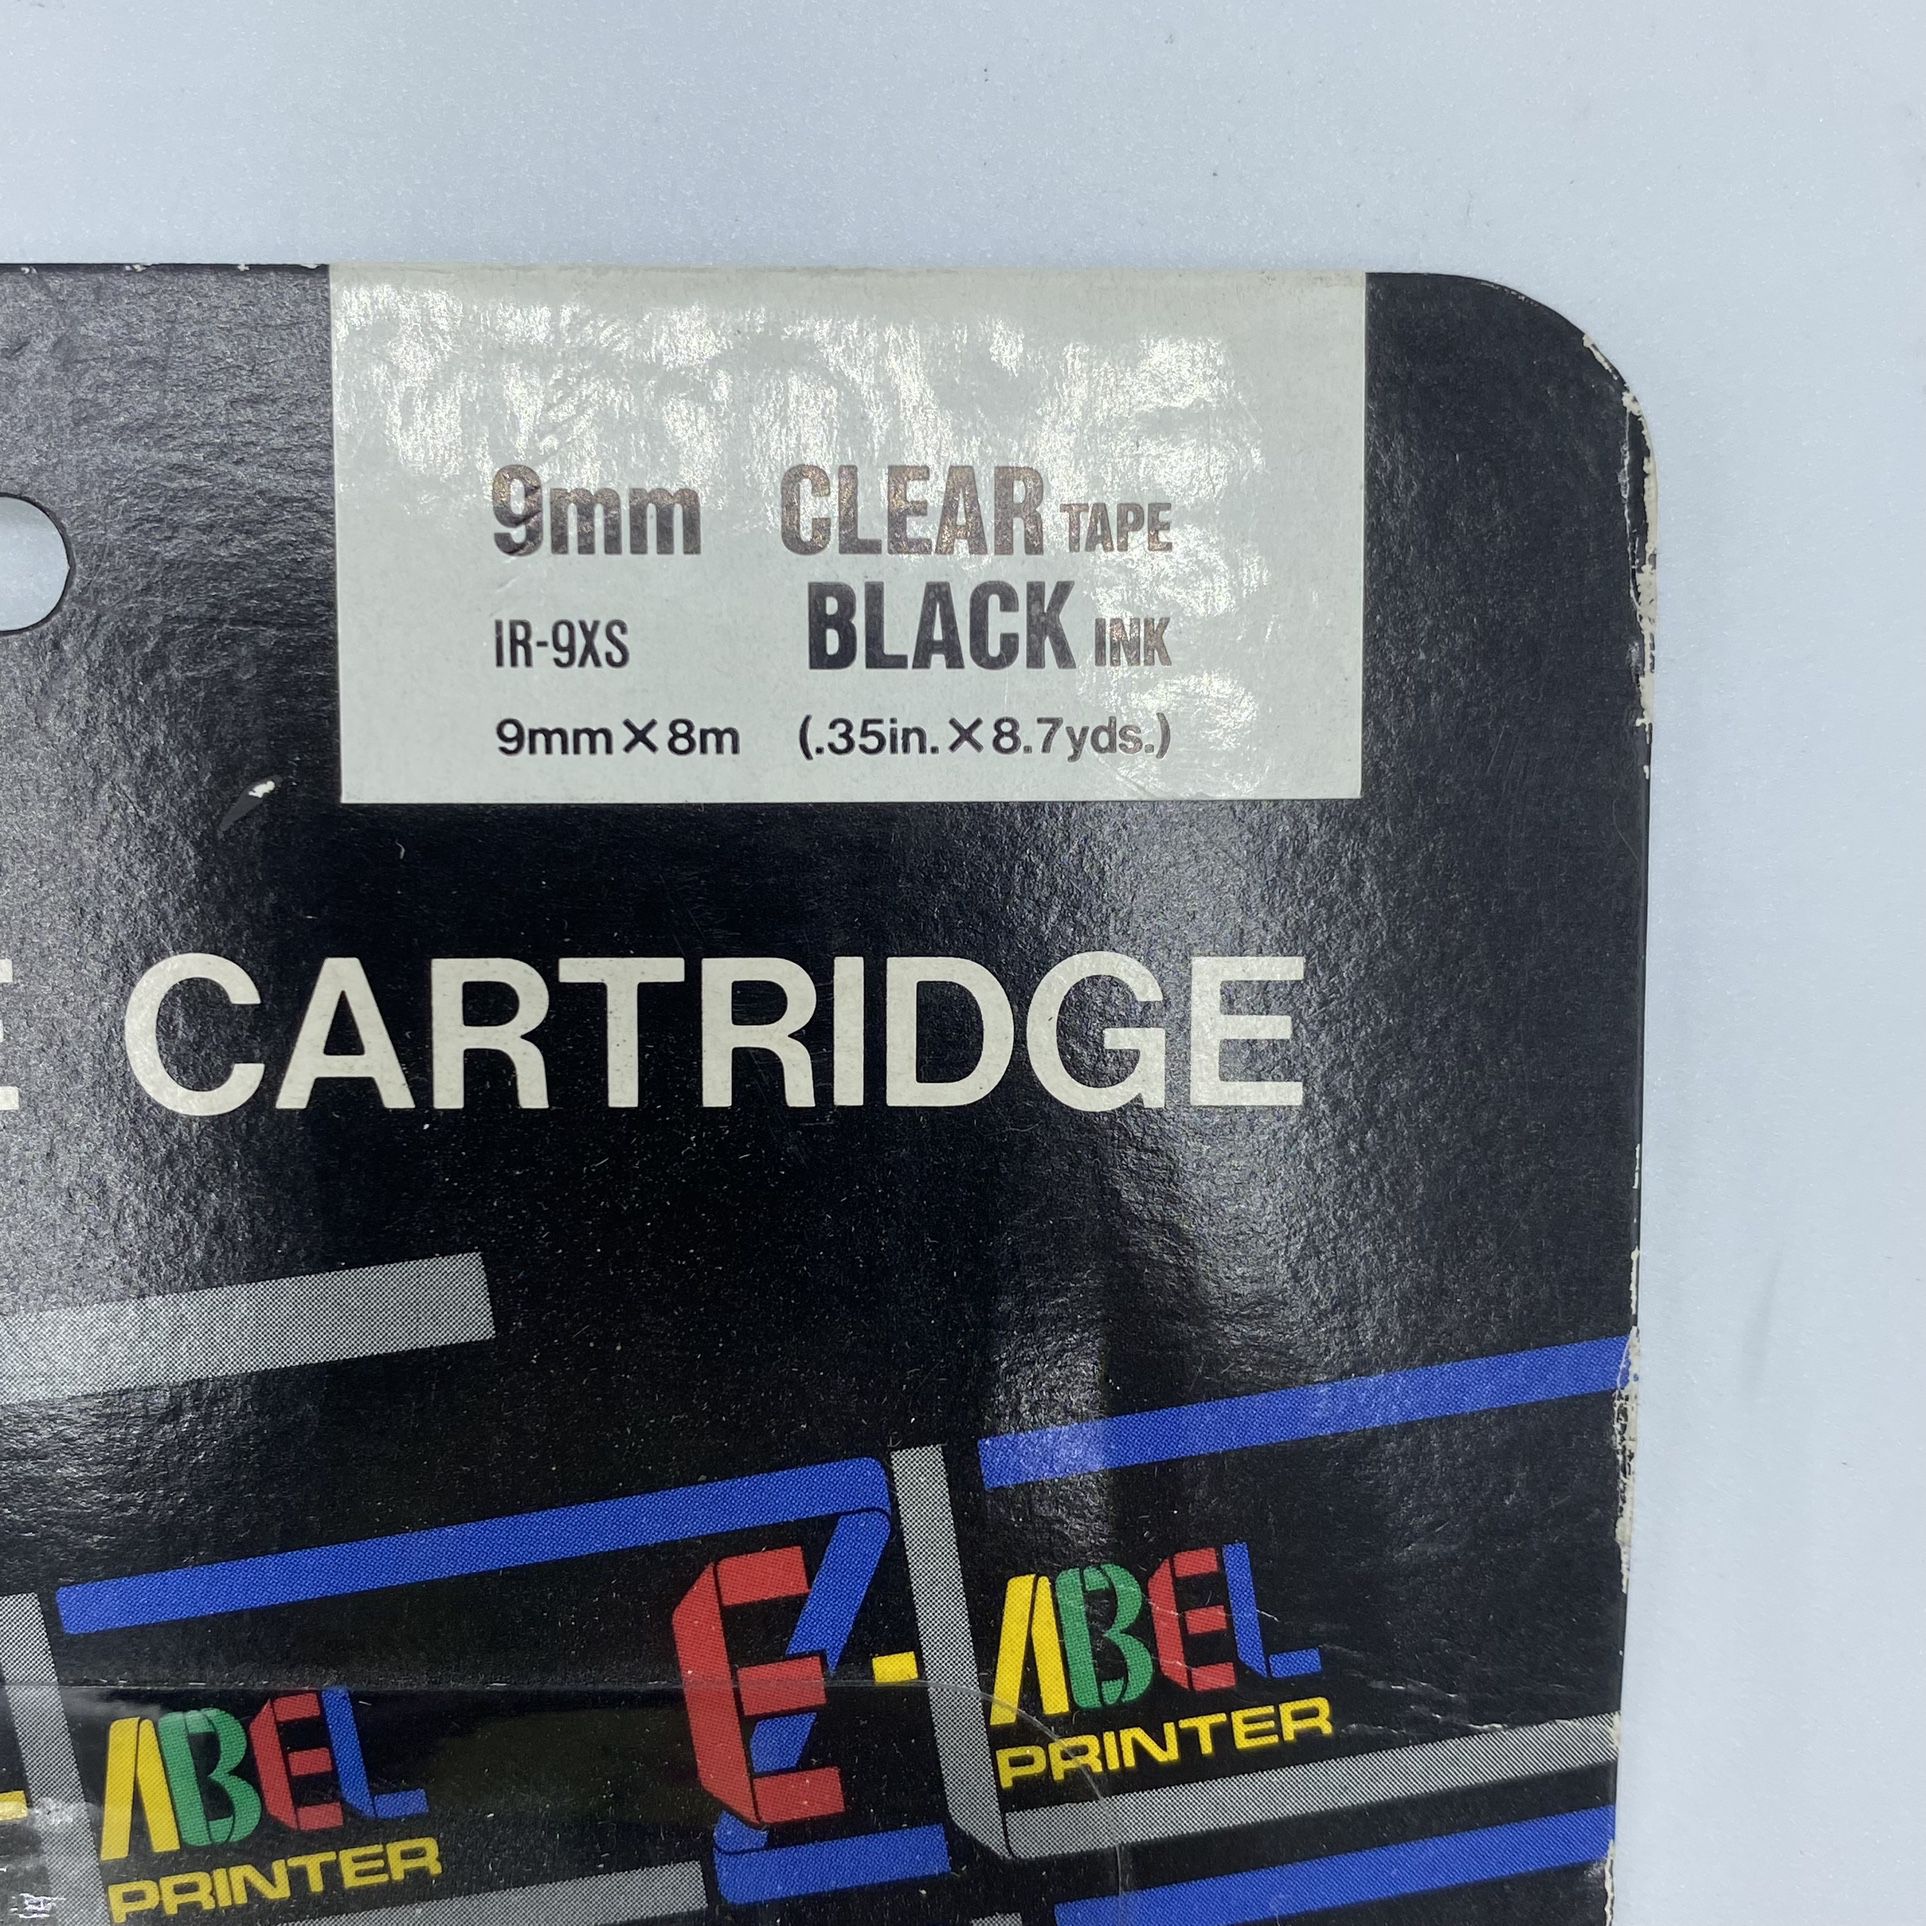 EZ Label Printer Tape Cartridge Casio - 9mm Clear Tape Black Ink 